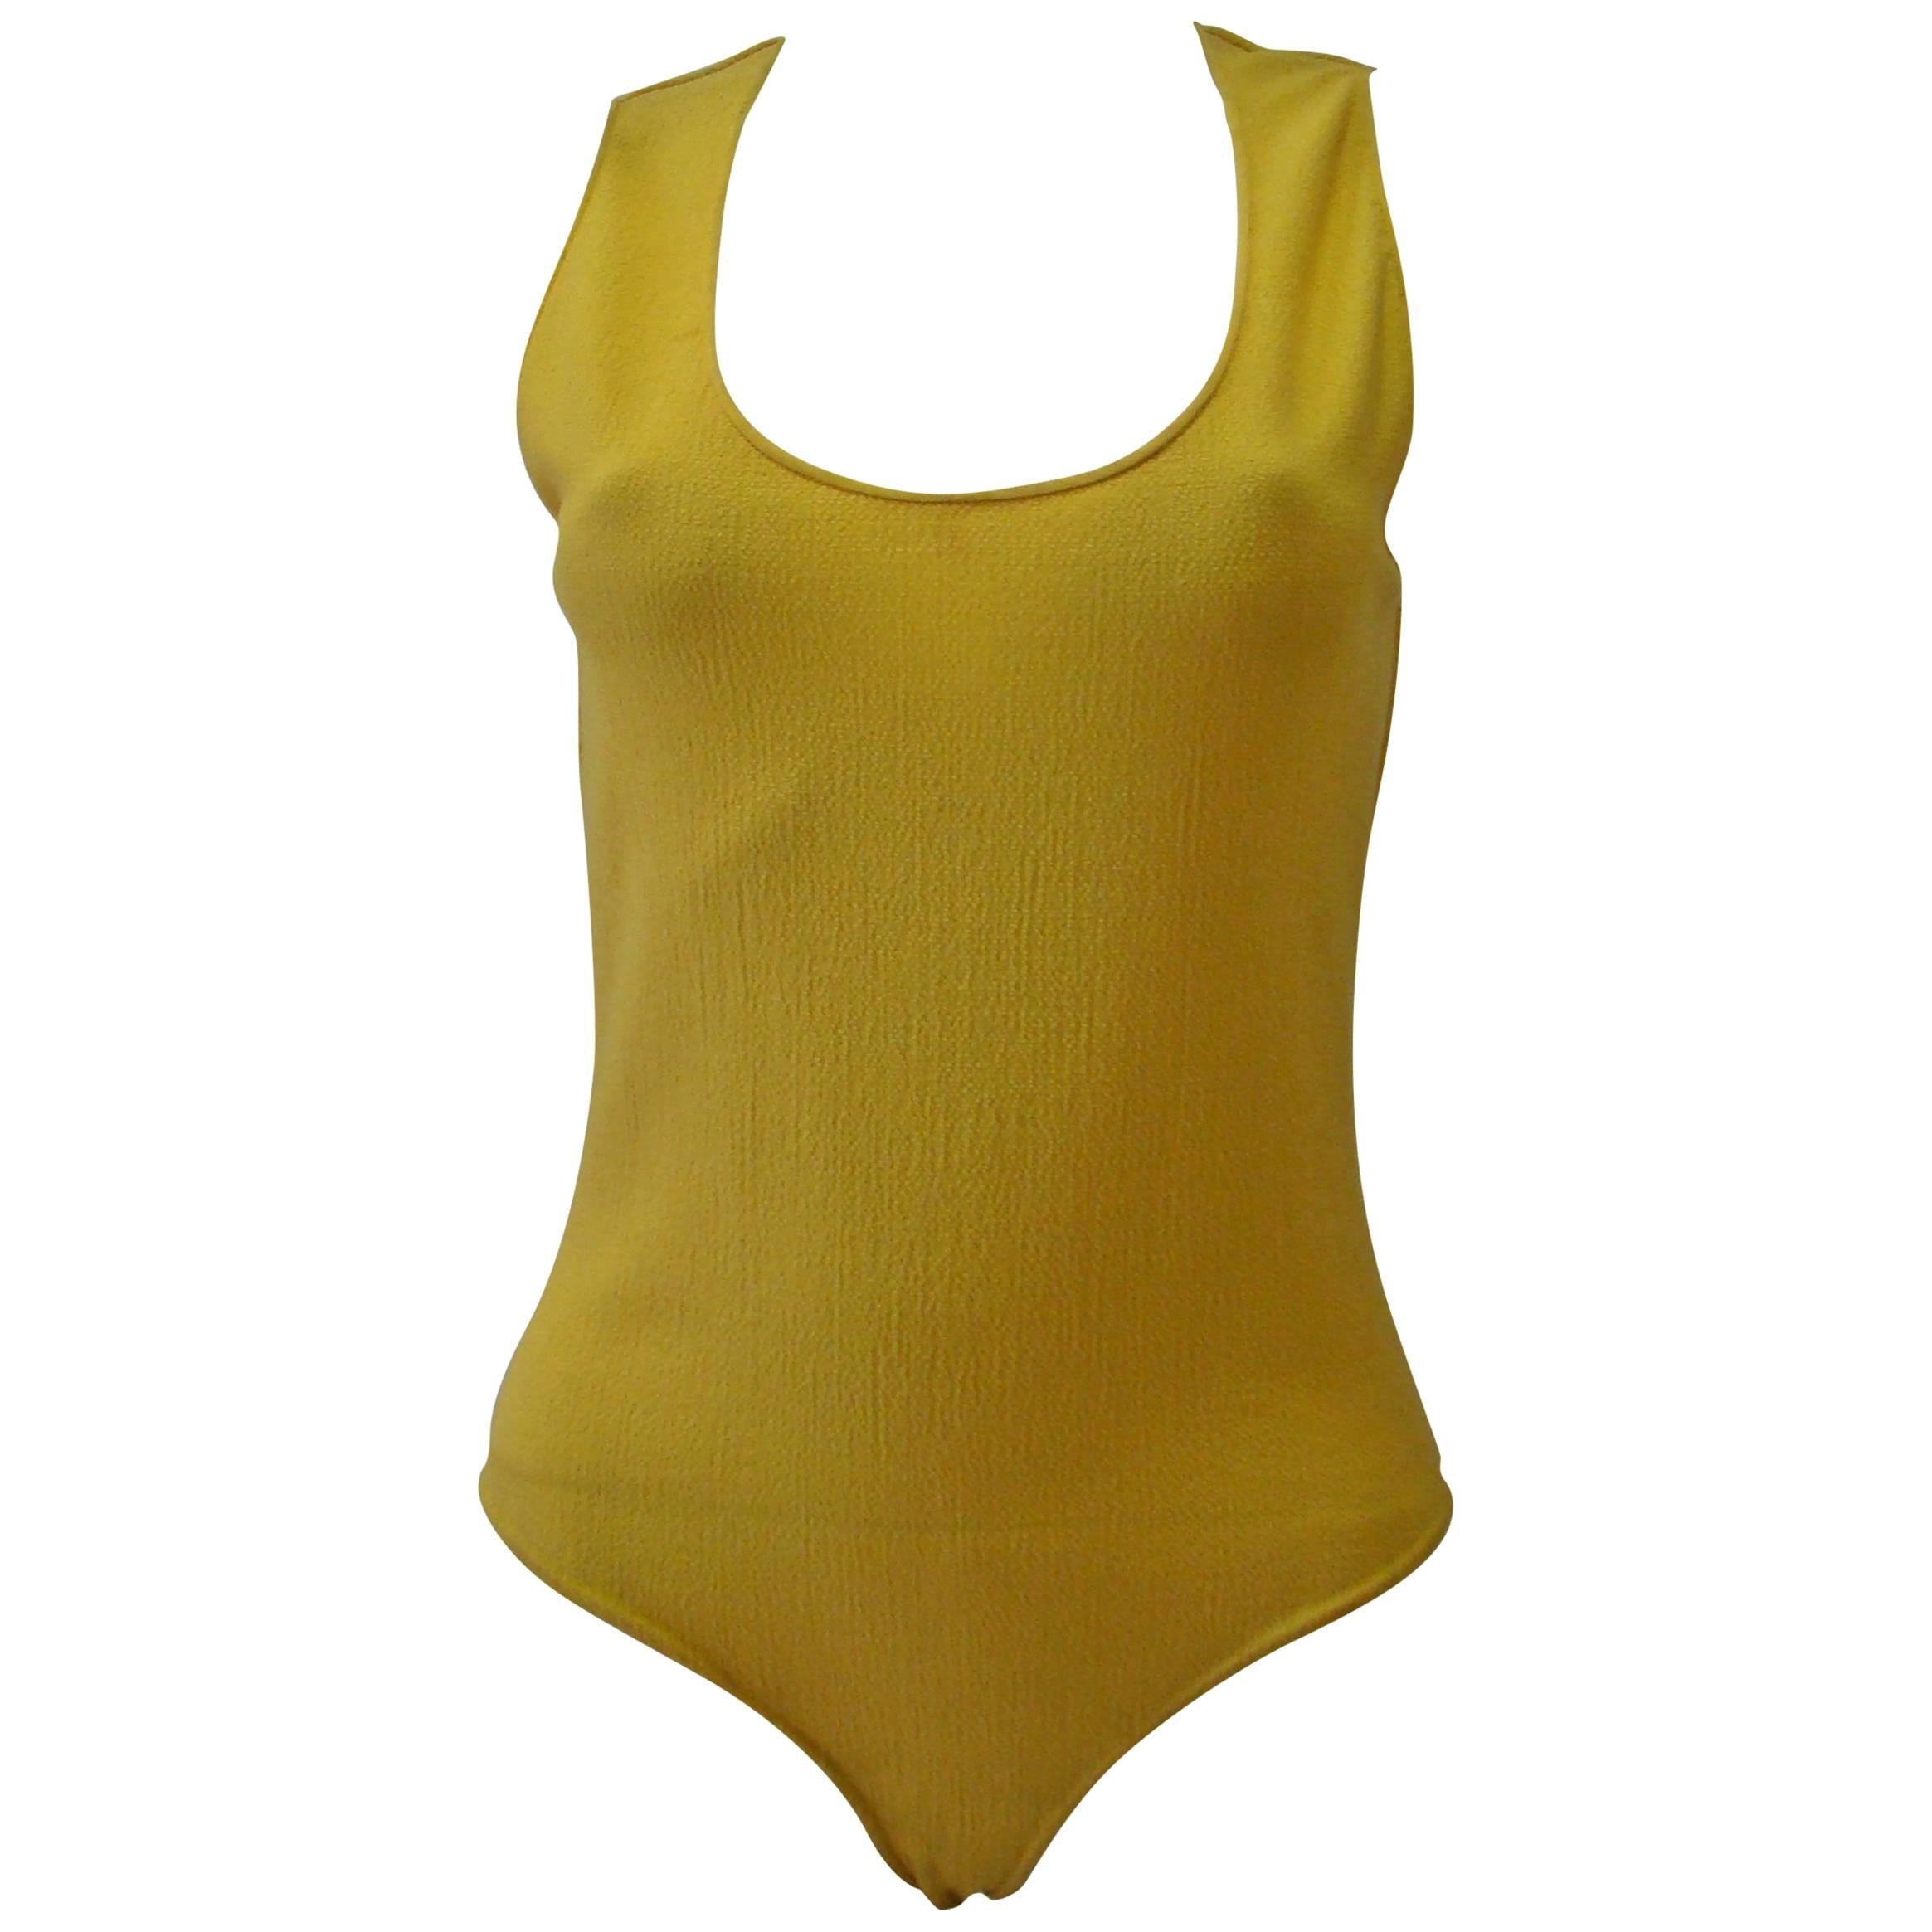 Gianni Versace Yellow Bodysuit 1990s For Sale